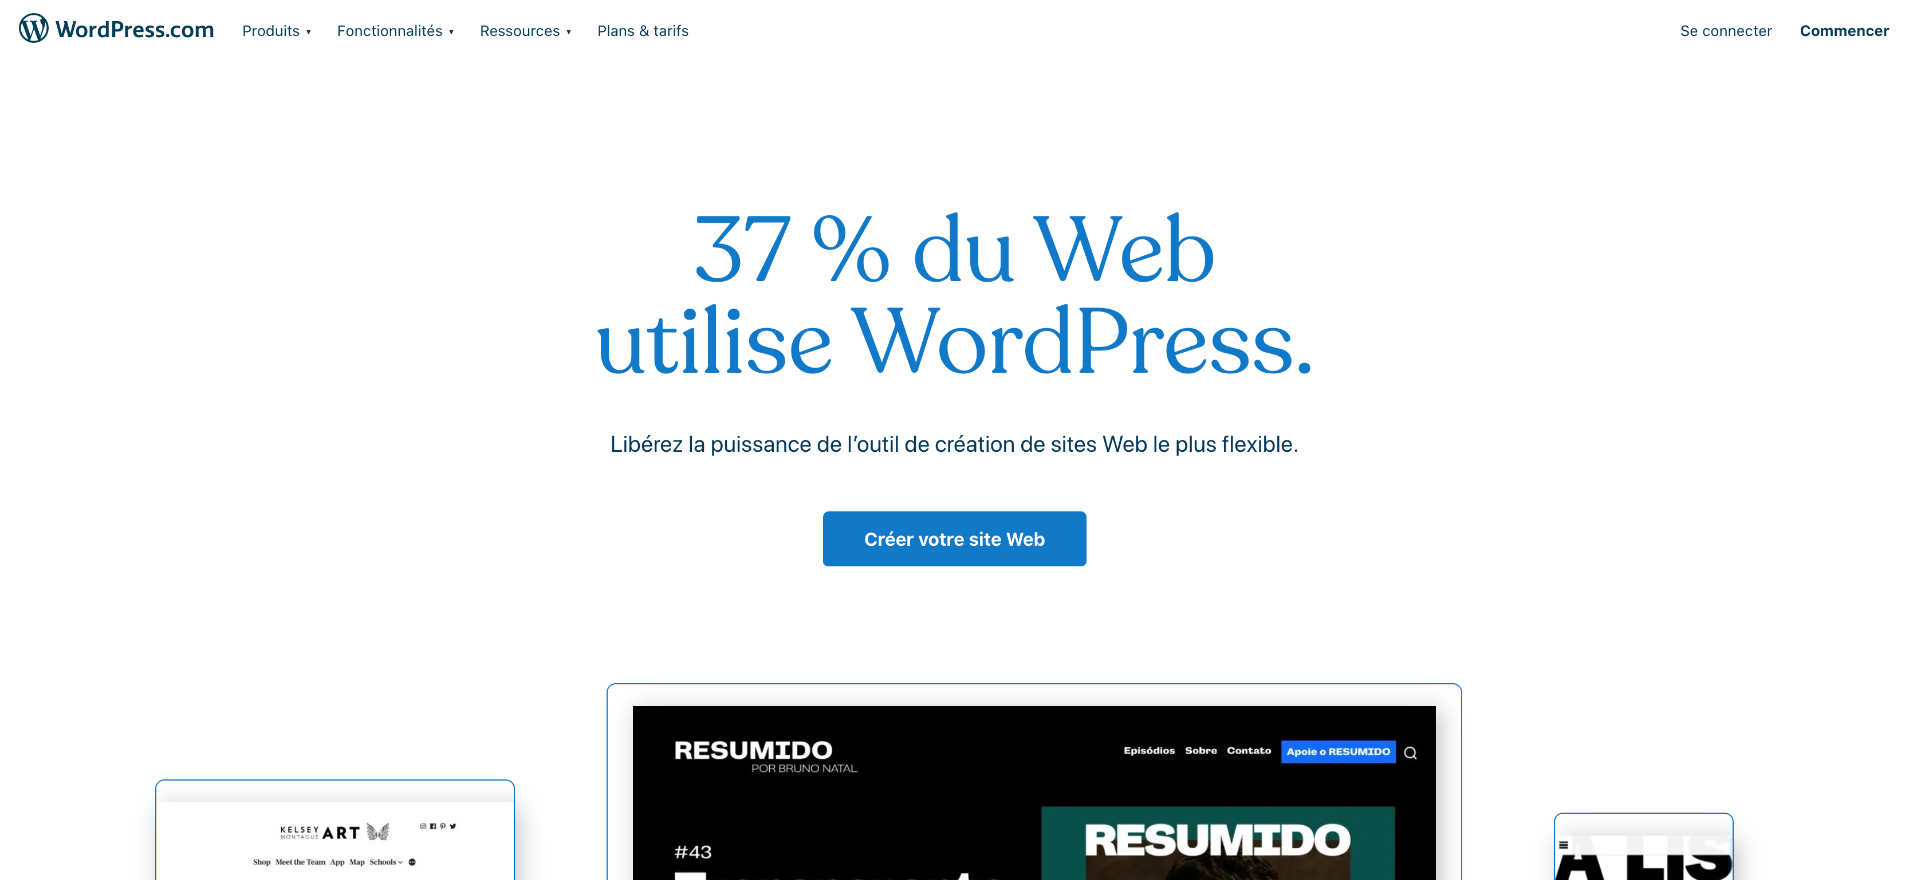 Le site WordPress.com 